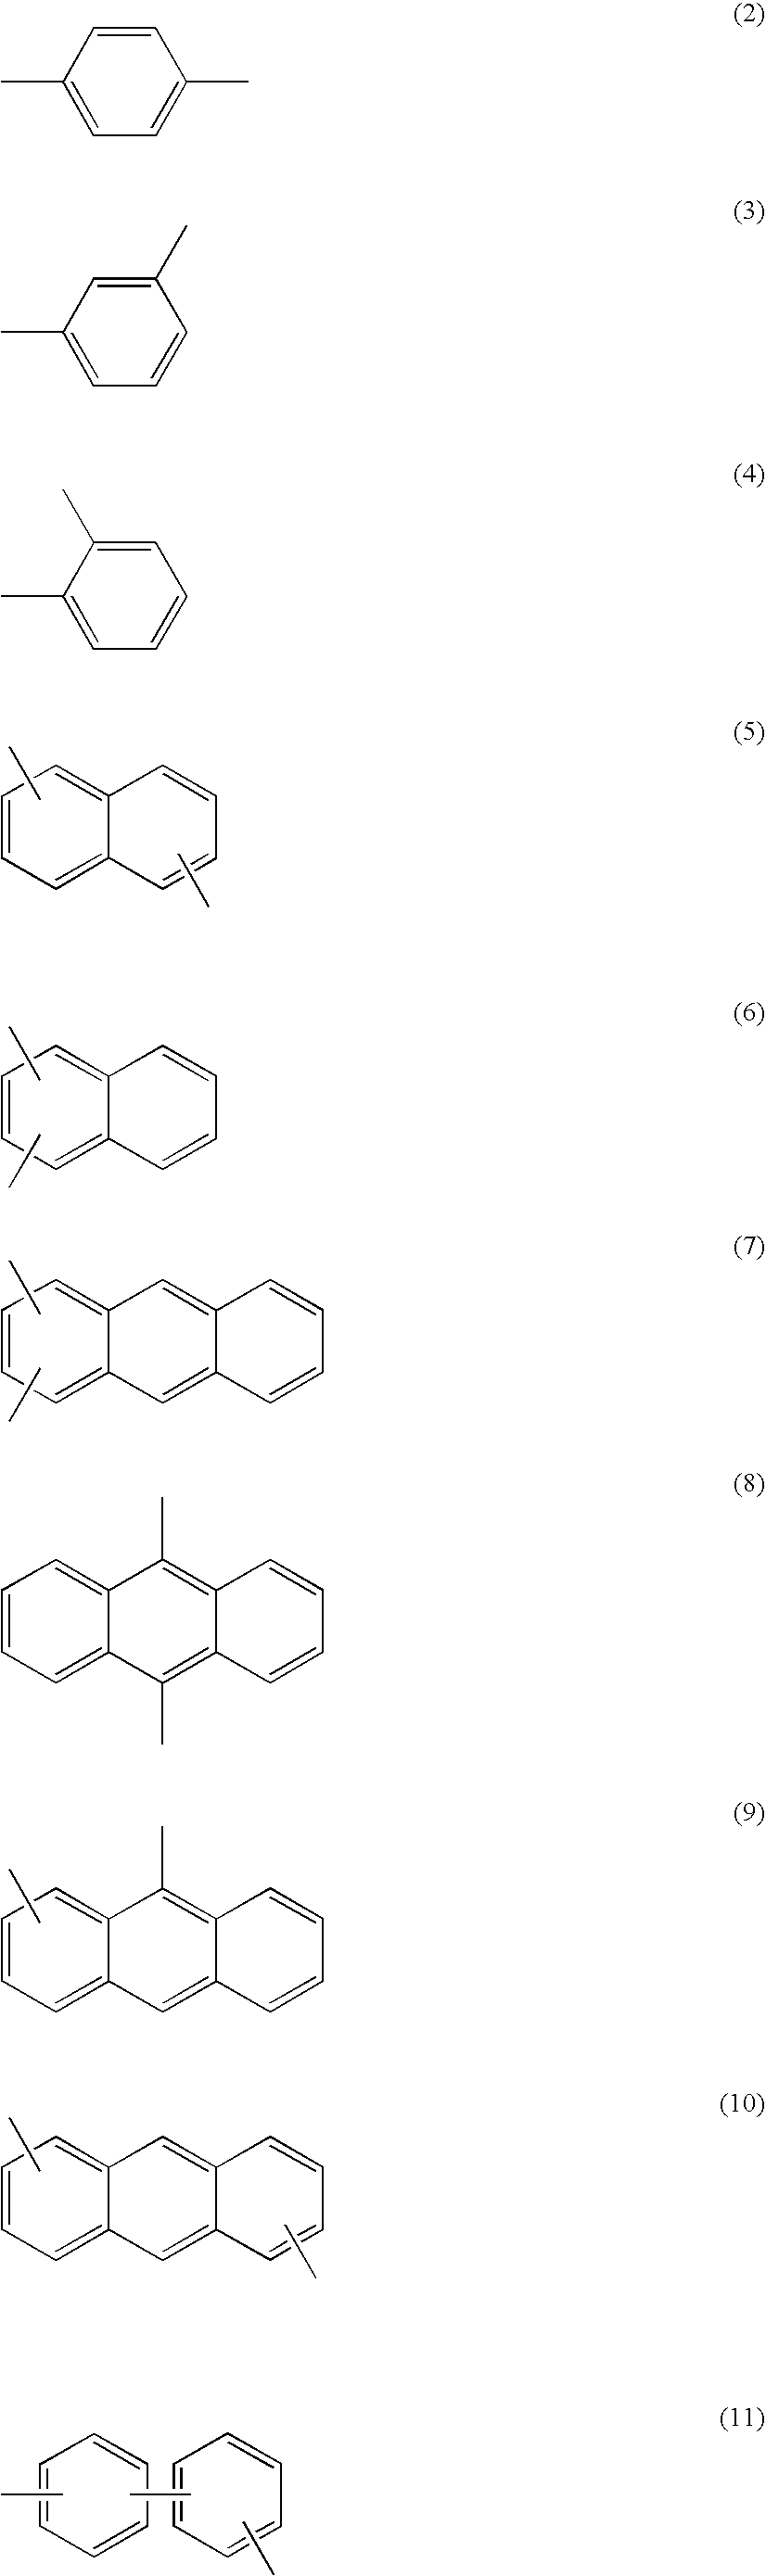 Sulfonated polyelectrolyte membranes containing perfluorosulfonate ionomers